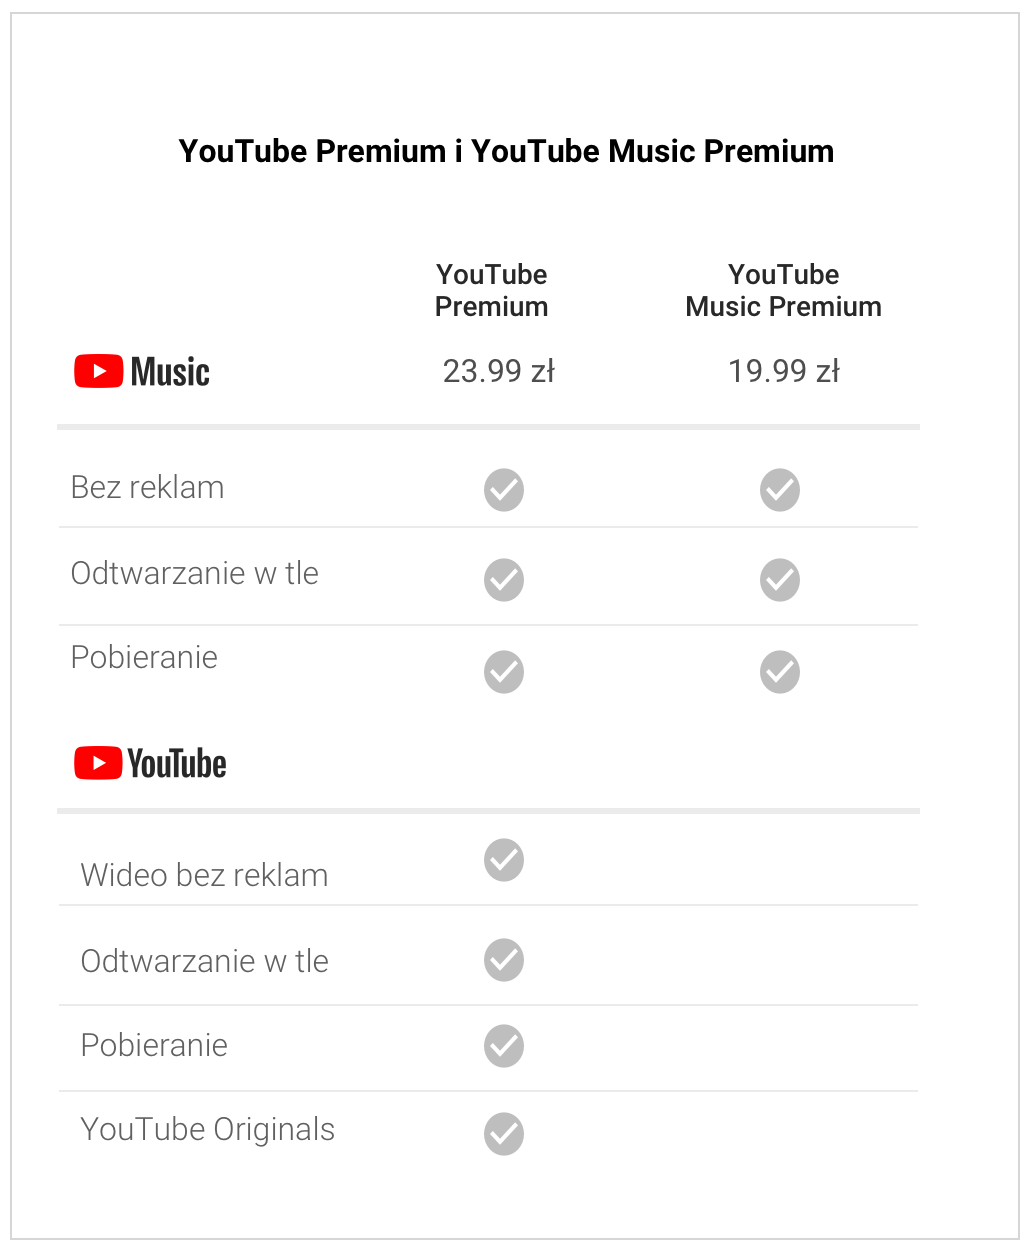 Youtube Premium. Ютуб премиум цена. Youtube Premium Poland cost. Youtube Premium цена на год в лирах. Ютуб премиум сколько стоит